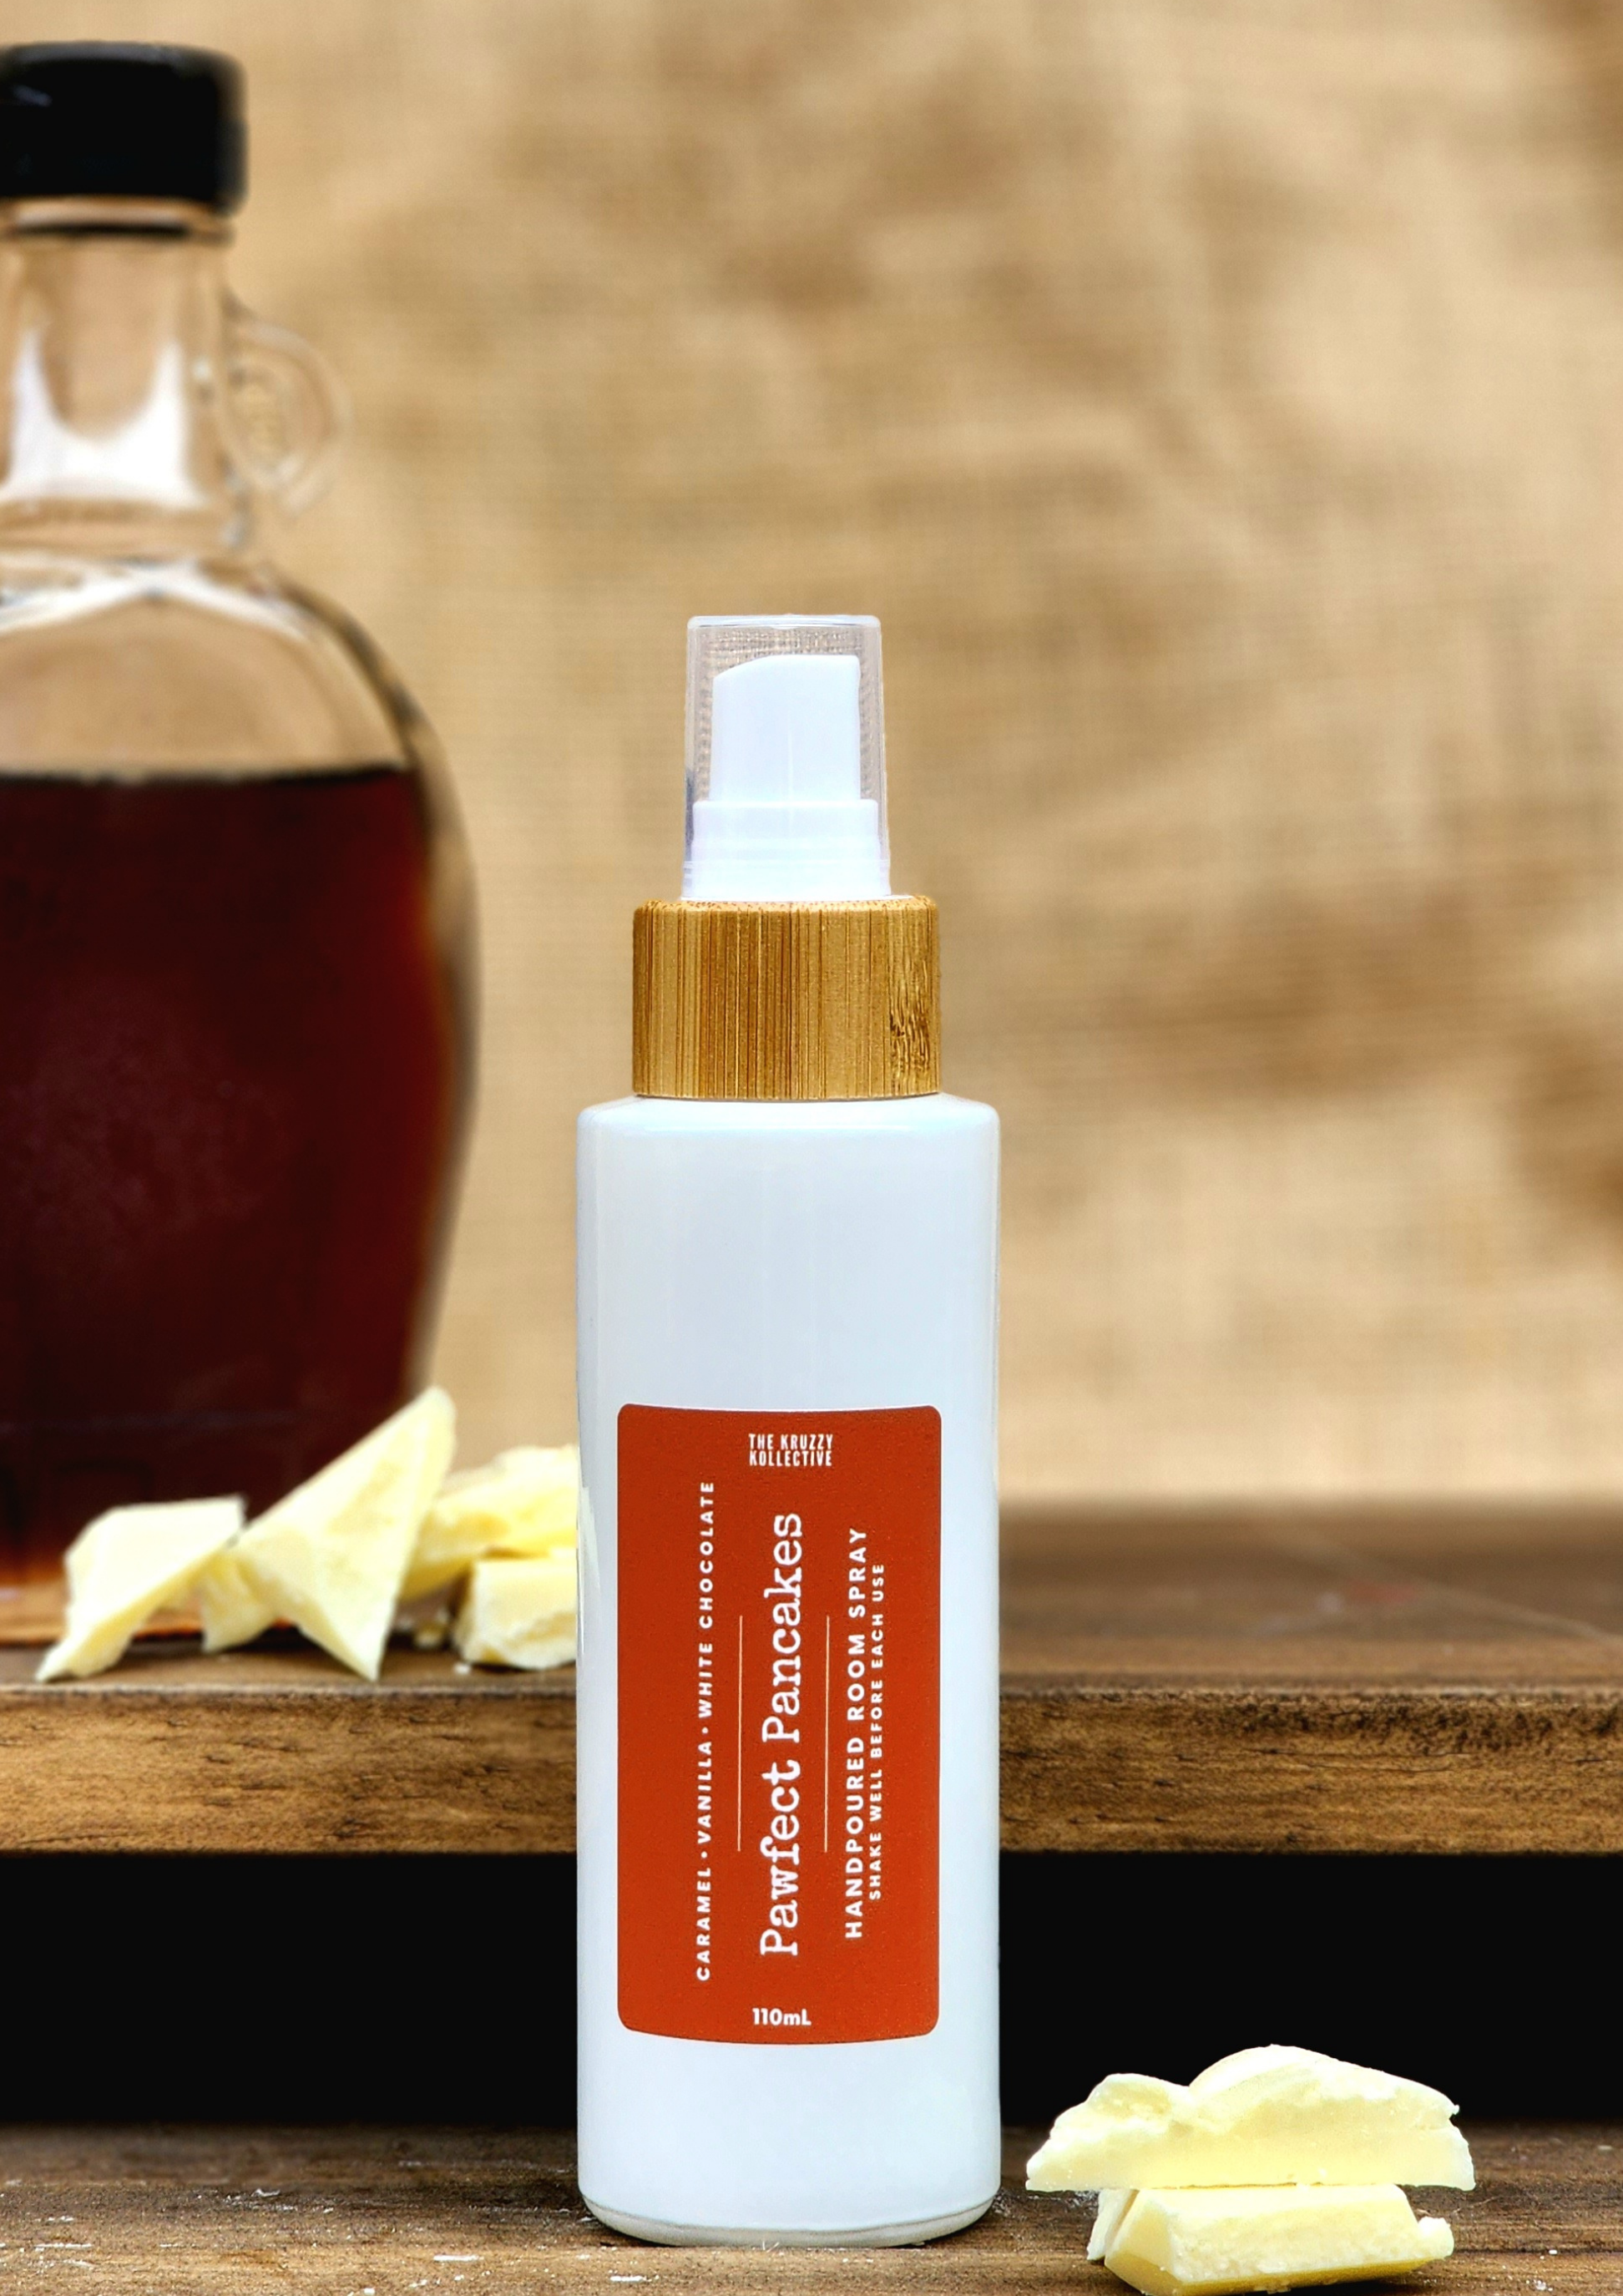 home fragrance spray odor eliminators eco friendly room freshener air freshener  vanilla caramel